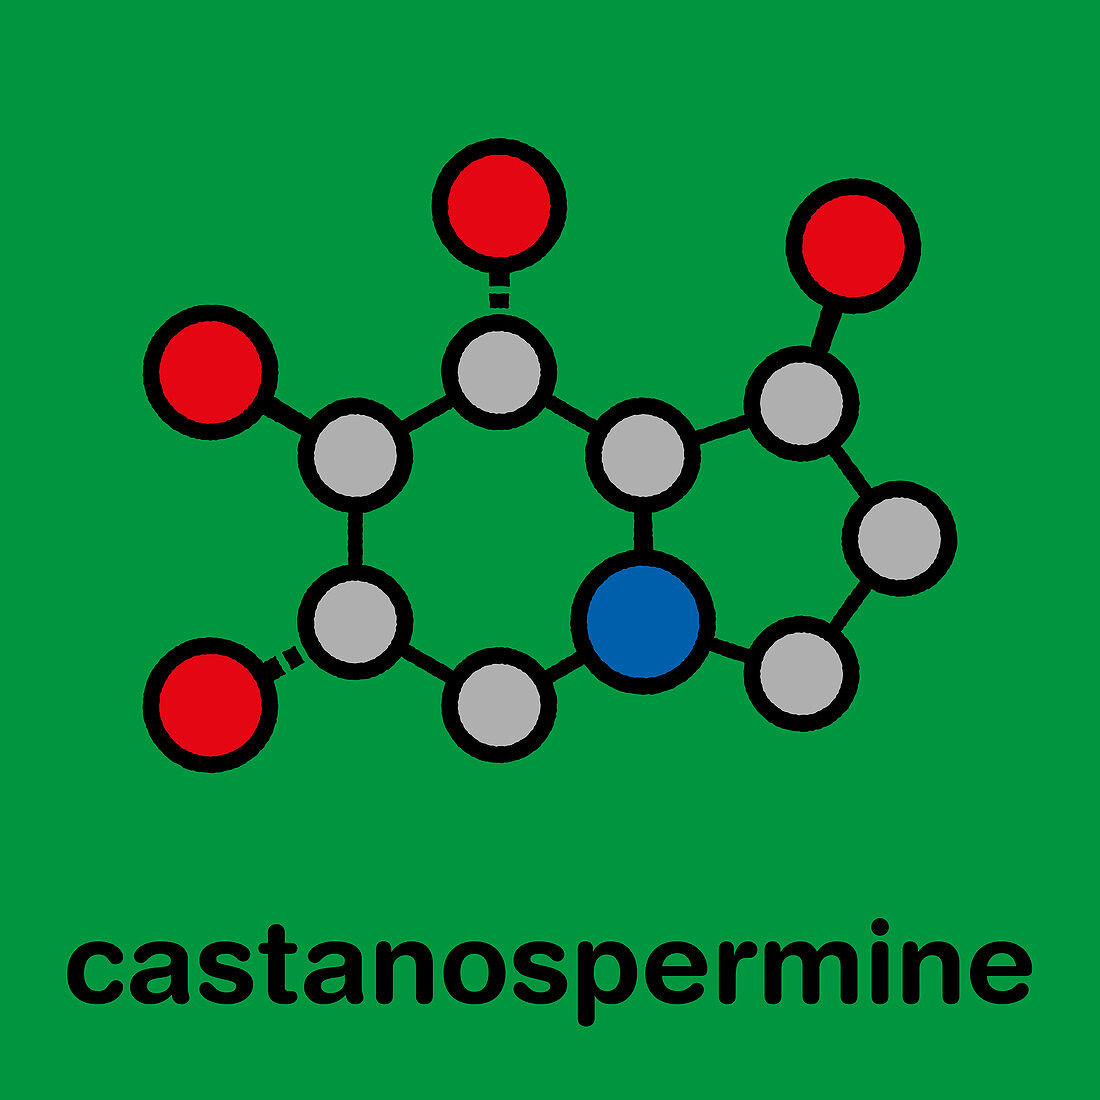 Castanospermine alkaloid molecule, illustration